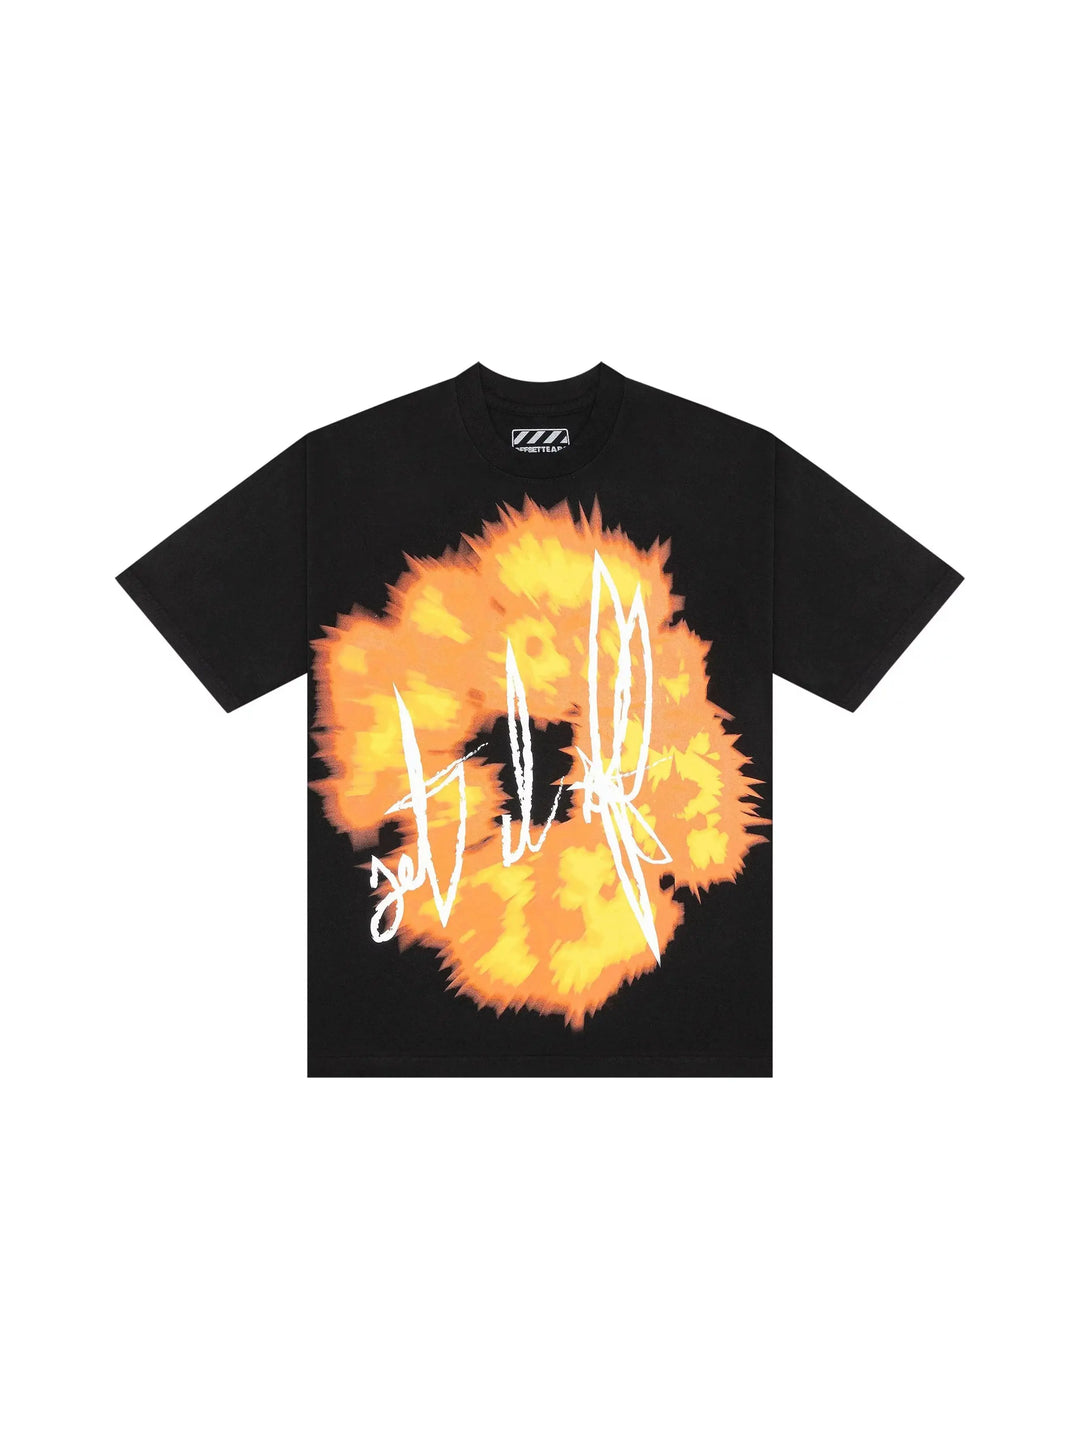 Denim Tears x Offset Set It Off #1 T-shirt Black in Melbourne, Australia - Prior